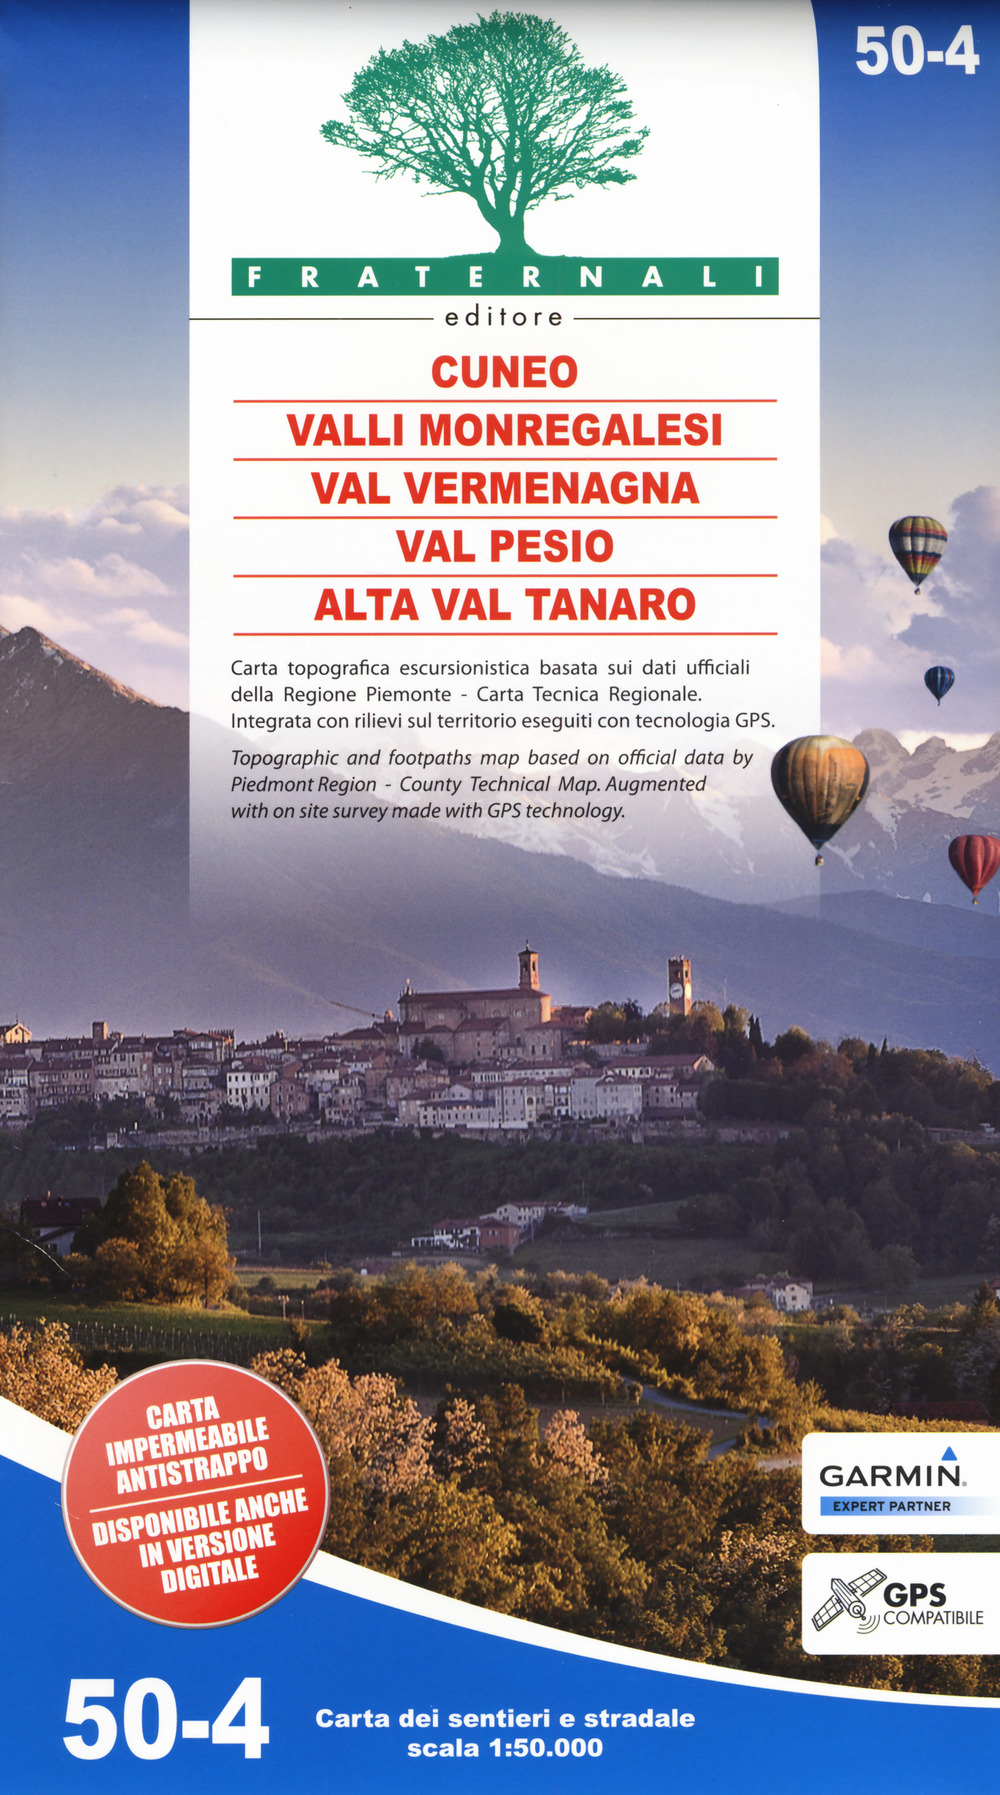 Image of Carta n. 50-4. Cuneo, Valli Monregalesi, Val Vermegnana, Val Pesio, Alta Val Tanaro. Carta dei sentieri e stradale 1:50.000. Adatto a GPS